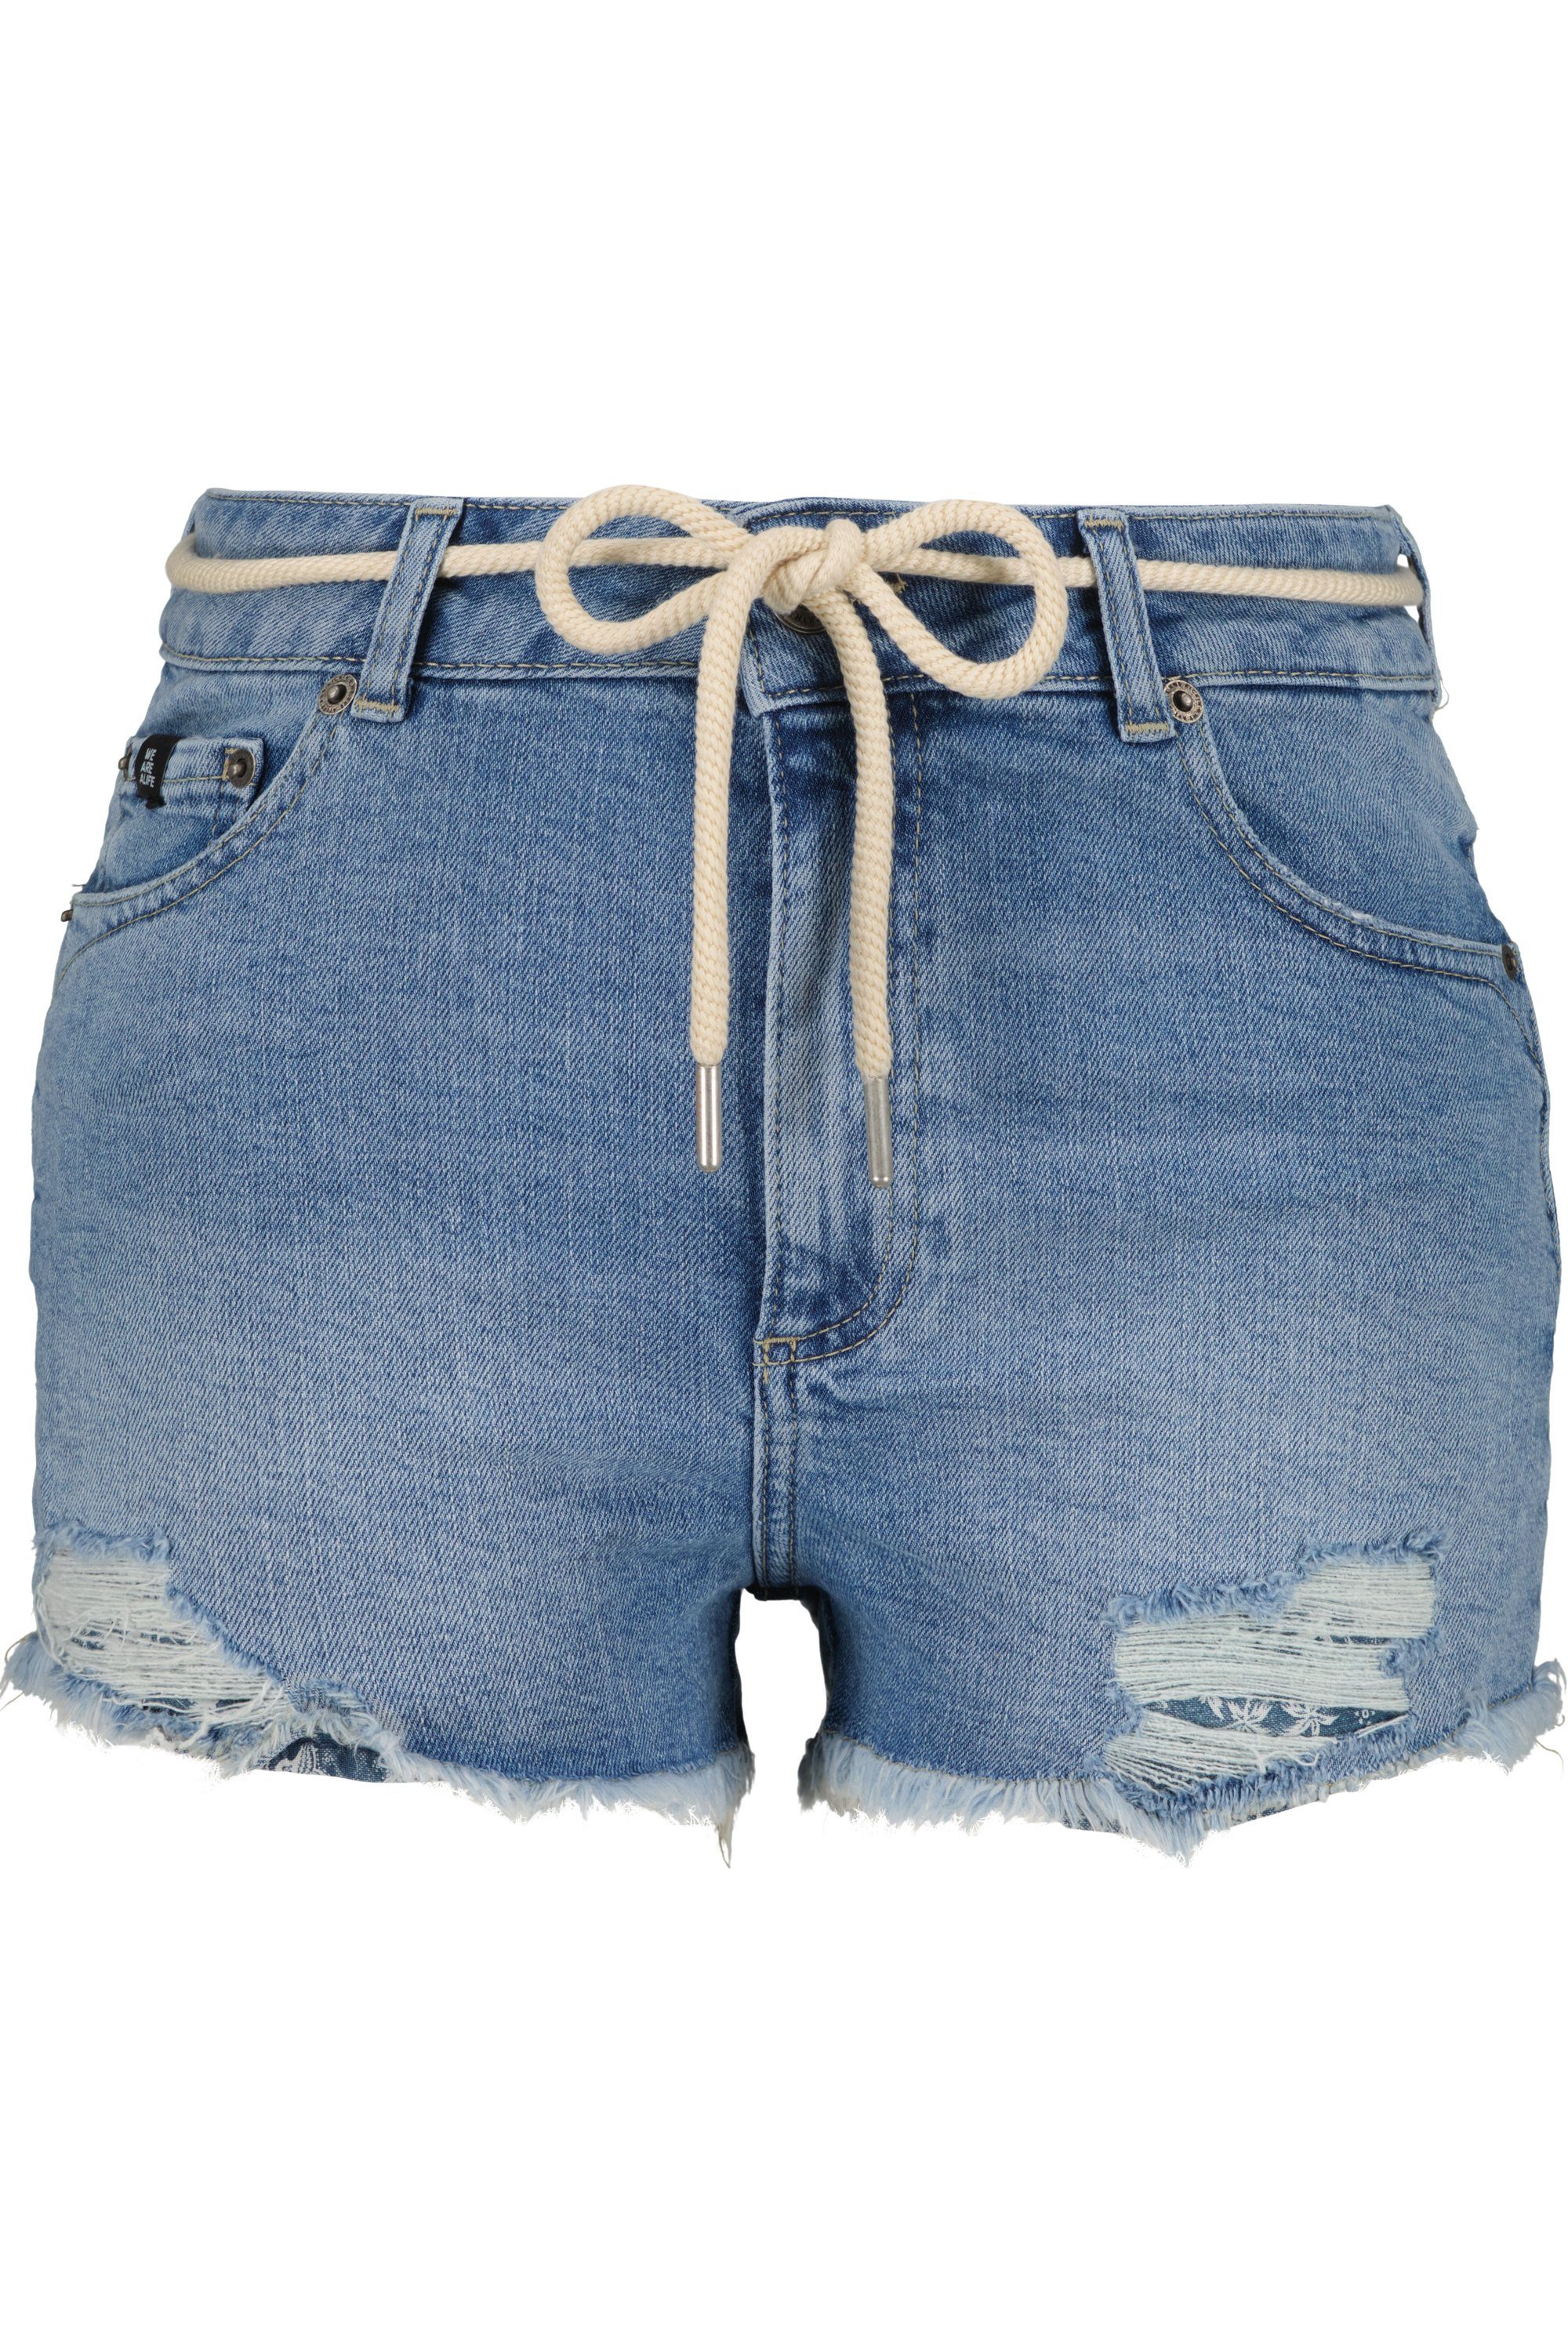 Alife & Kickin Damen denim kurze LatoyaAK washed DNM Shorts A Hose Jeansshorts, Shorts light